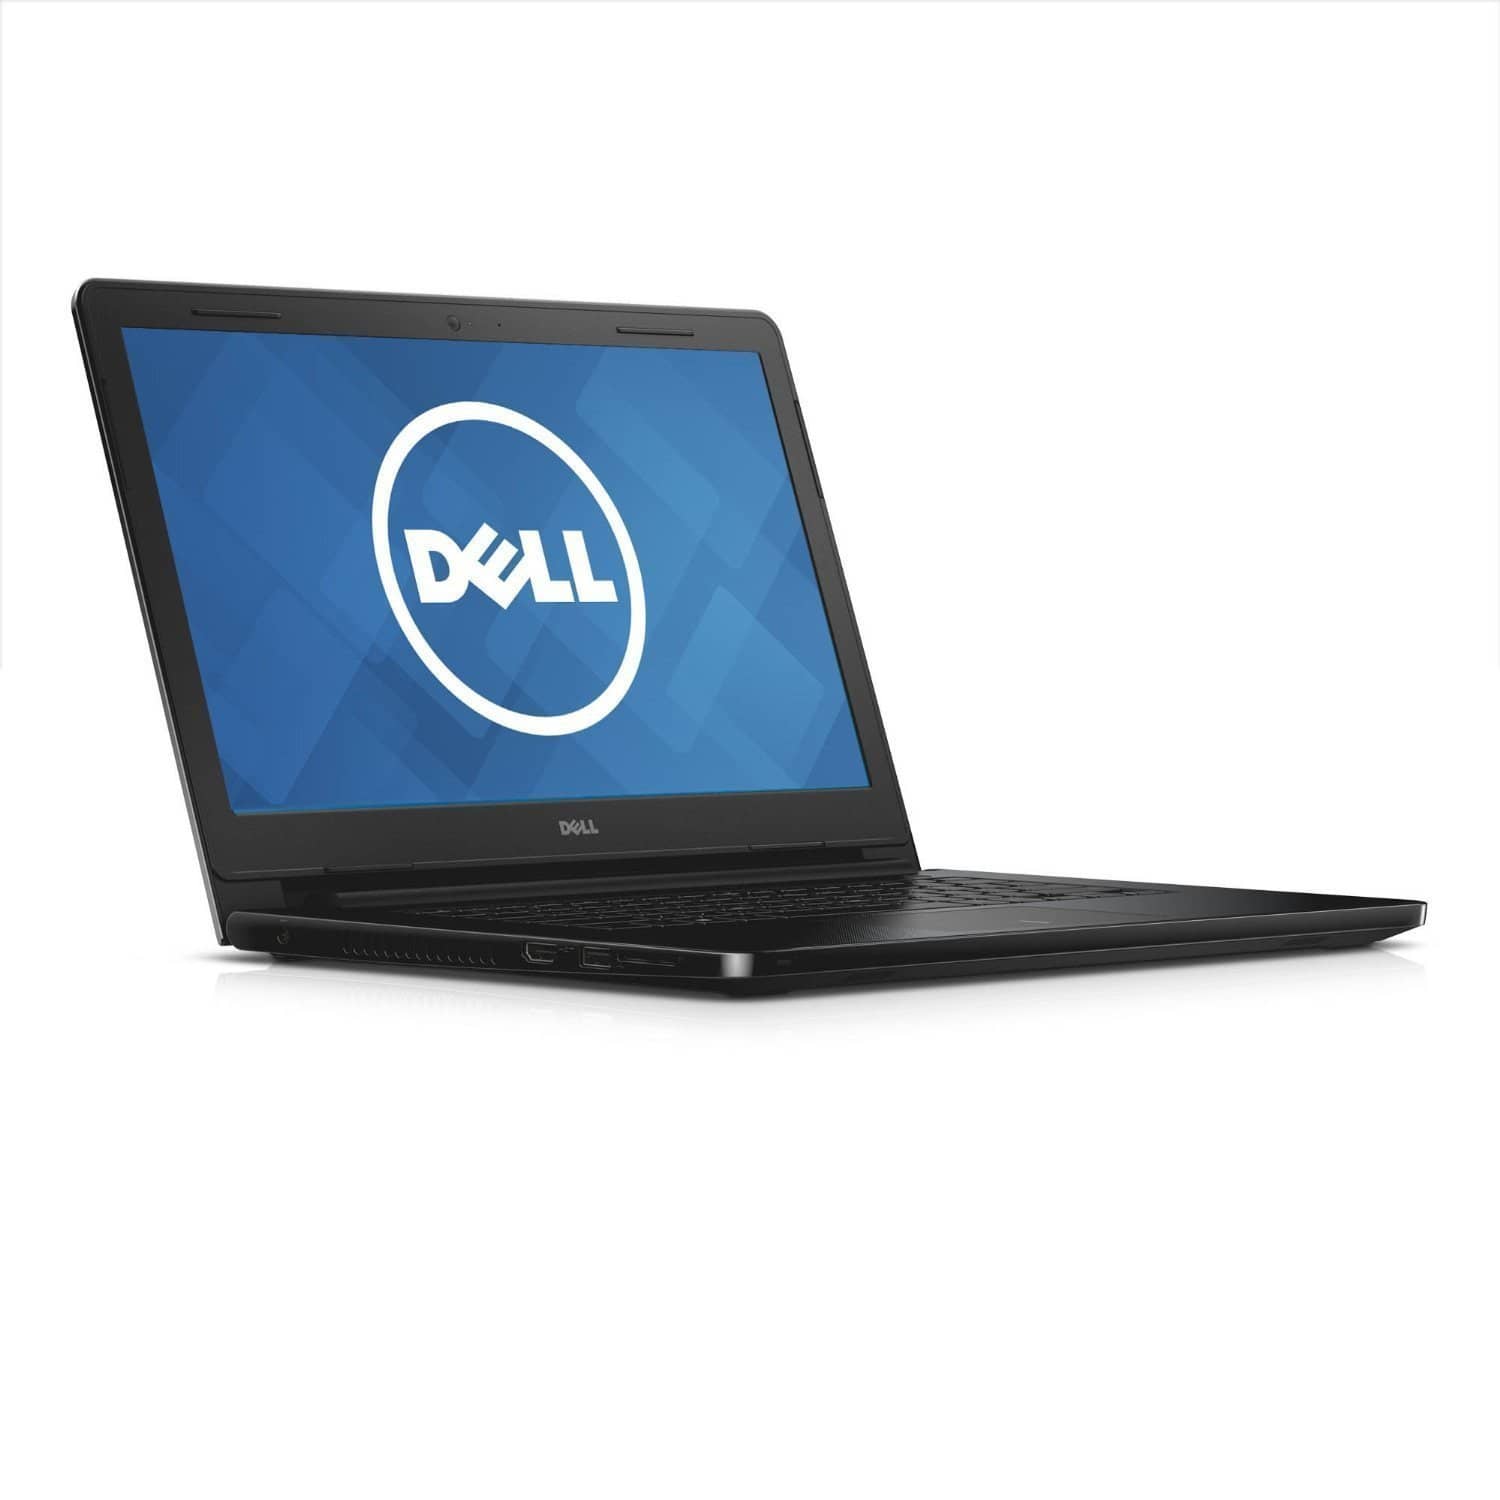 Dell Inspiron 14 inch HD Touchscreen Laptop Intel Dual Core